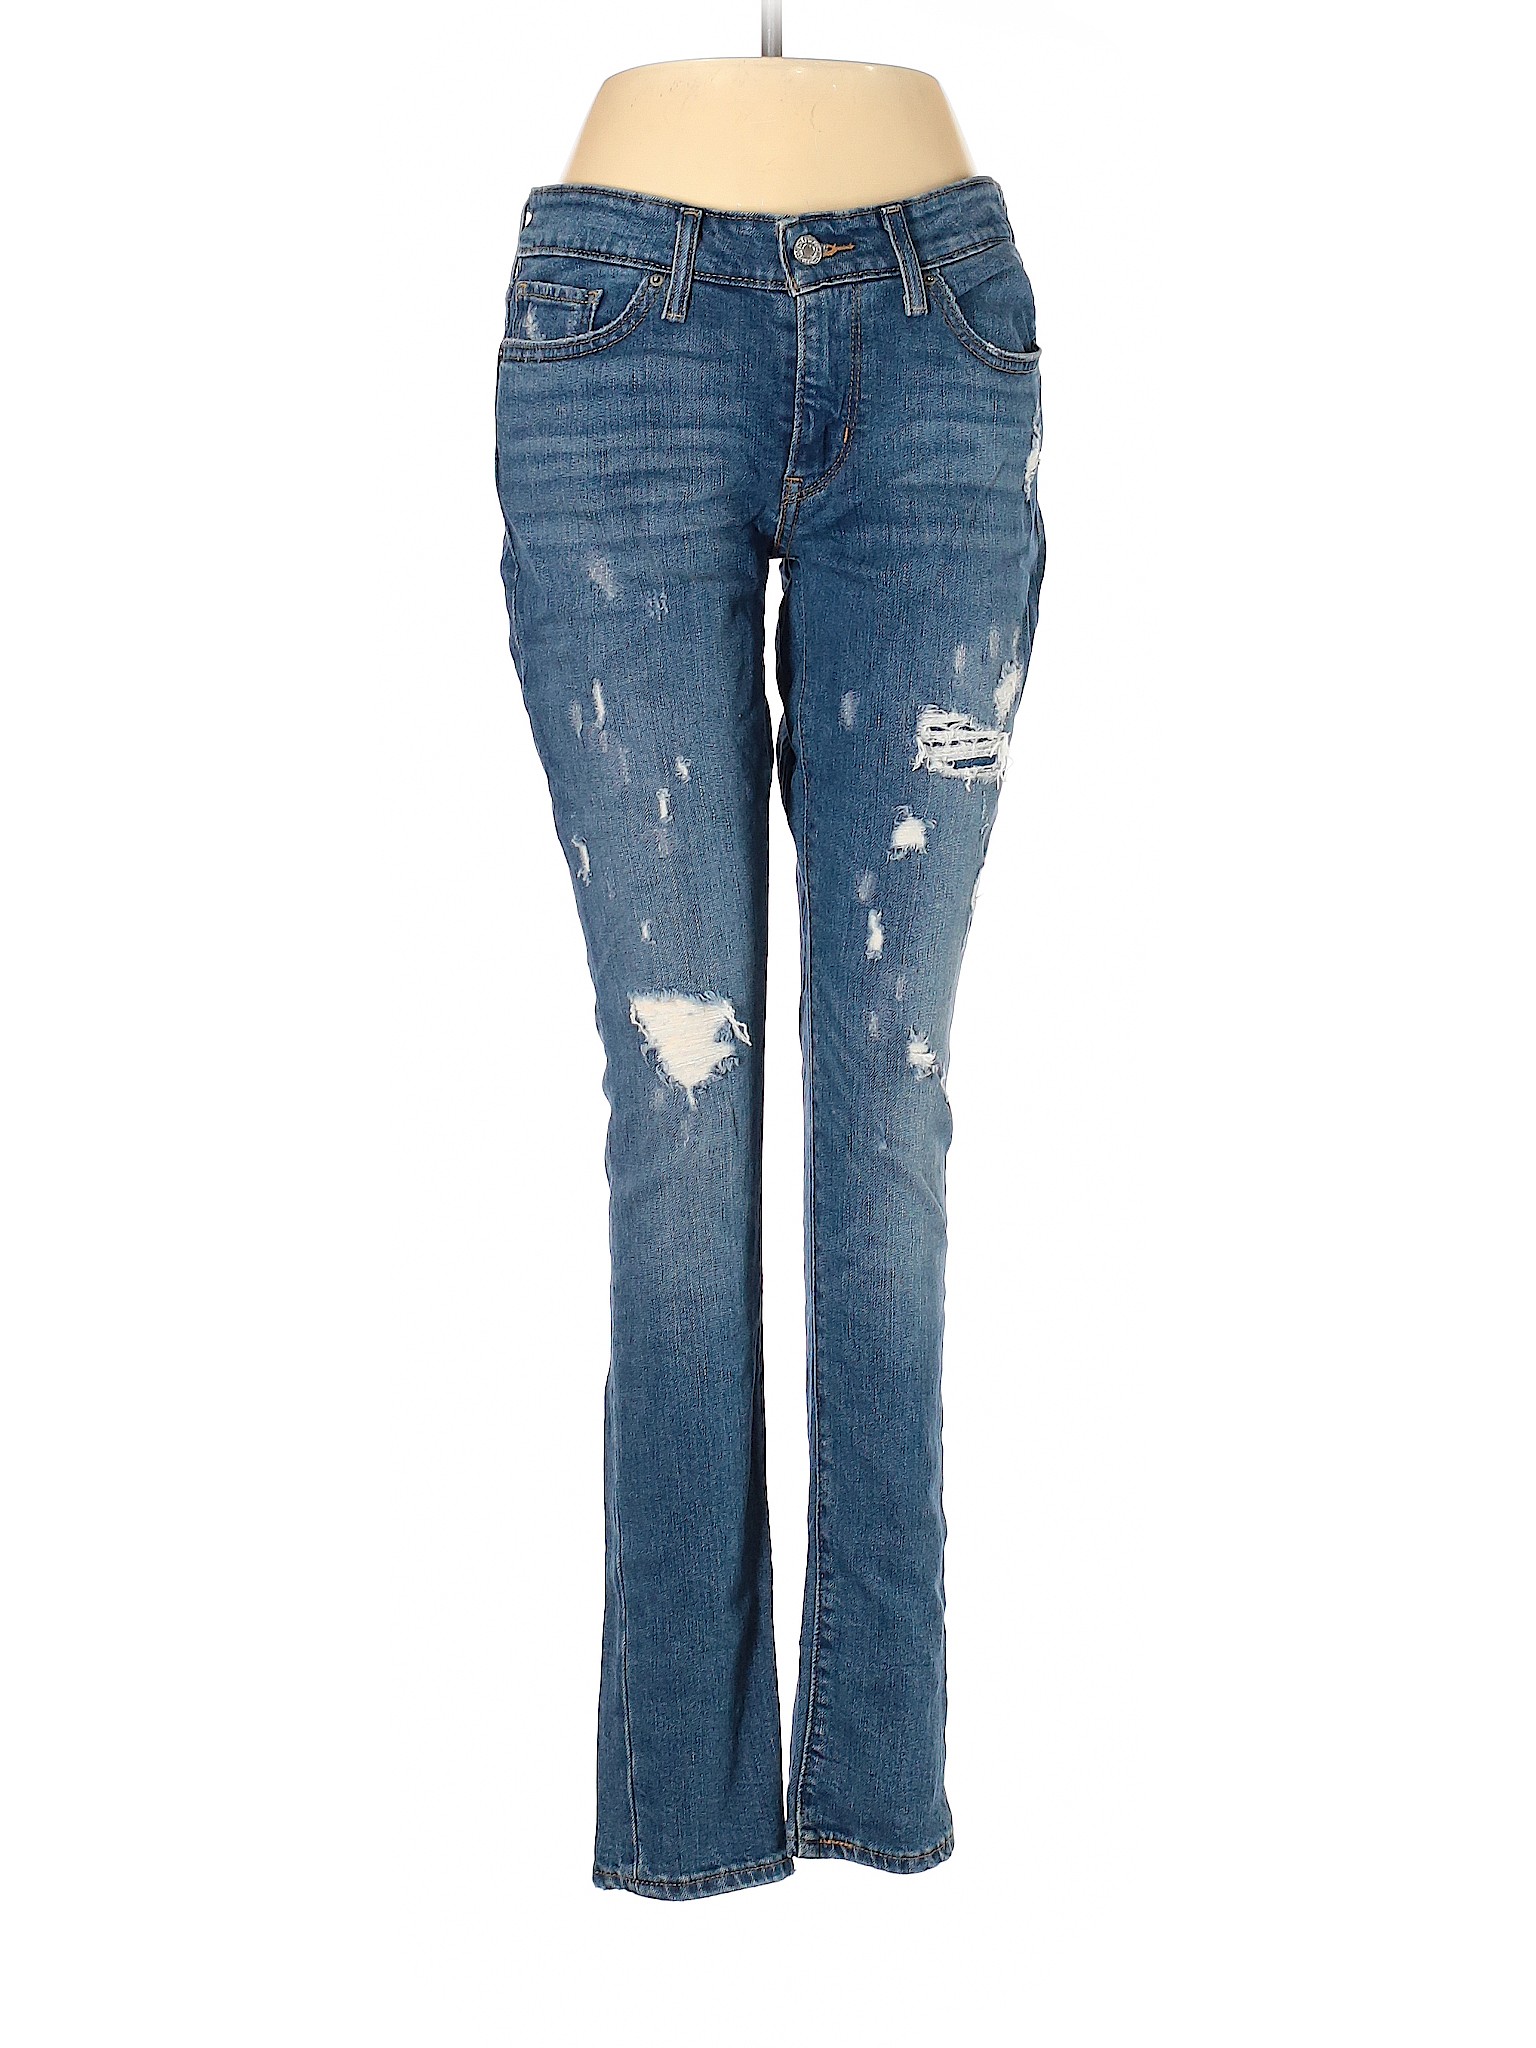 Levi's Blue Jeans 28 Waist - 20% off | thredUP